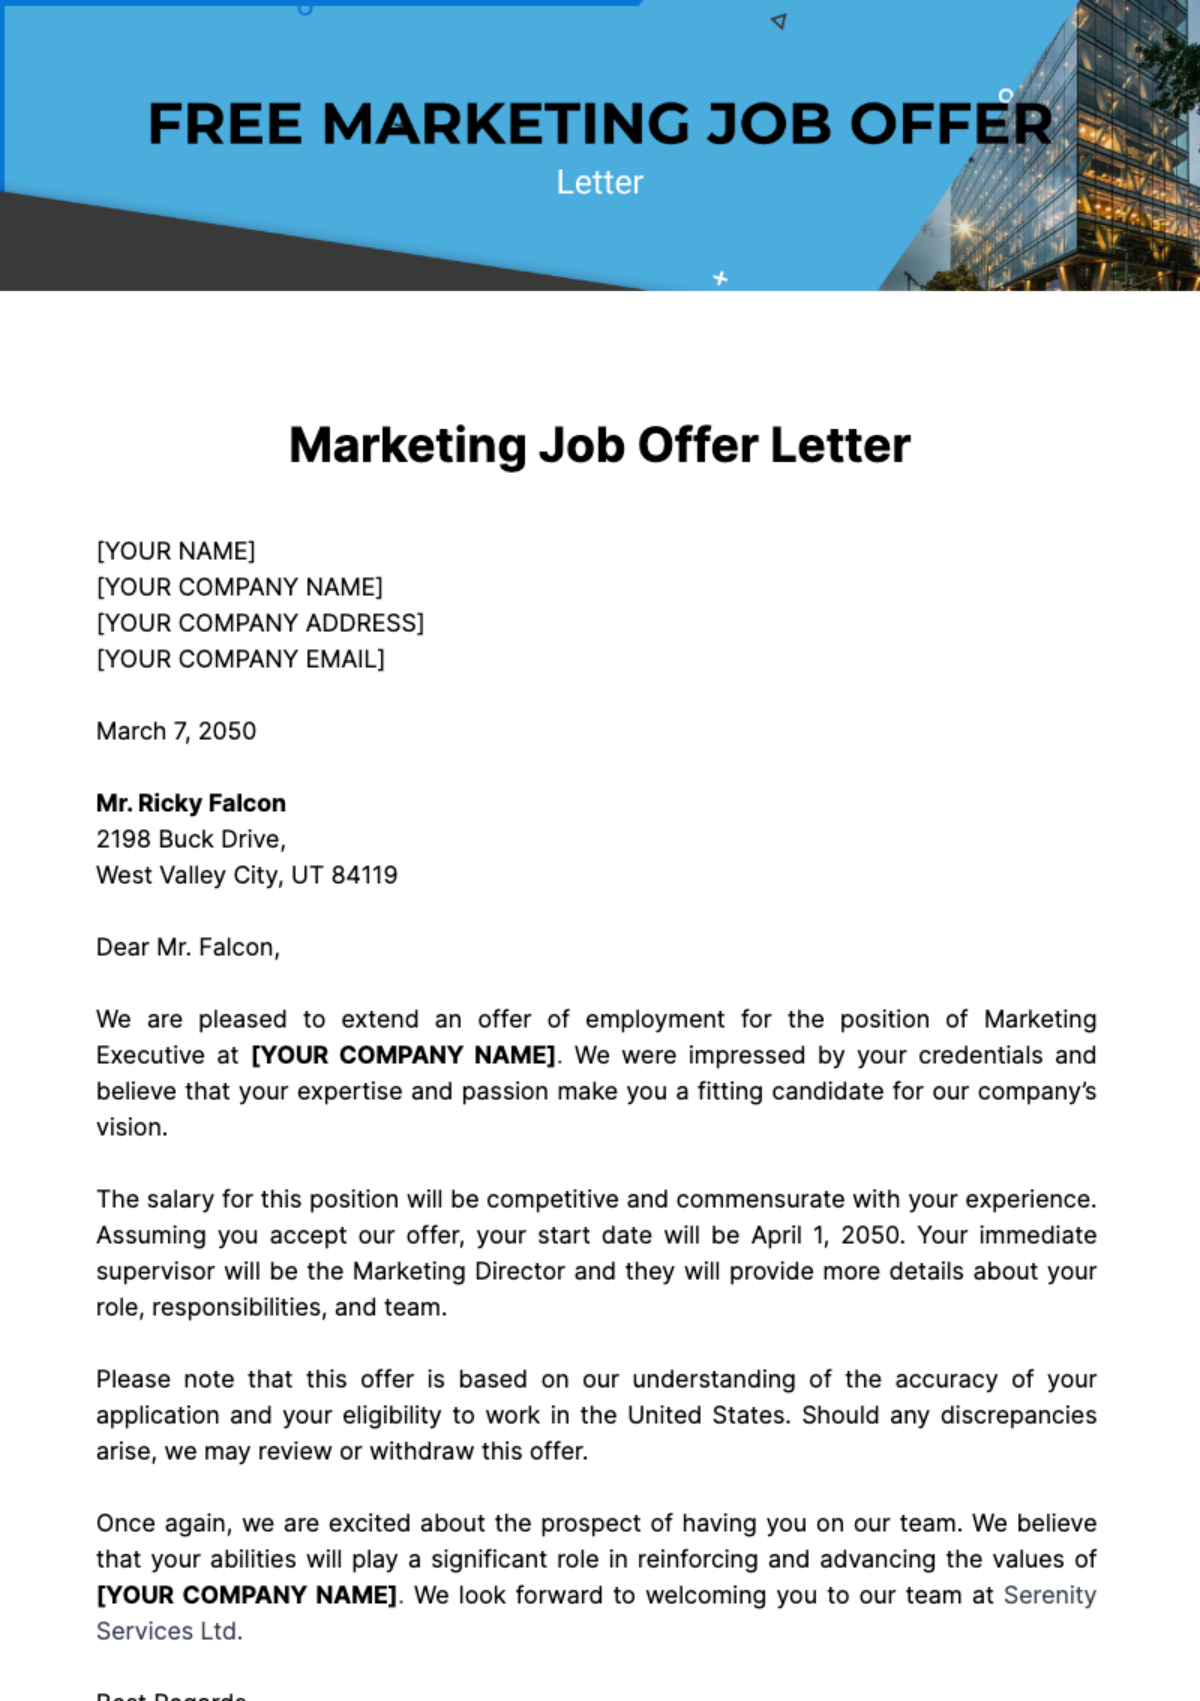 Free Marketing Job Offer Letter Template